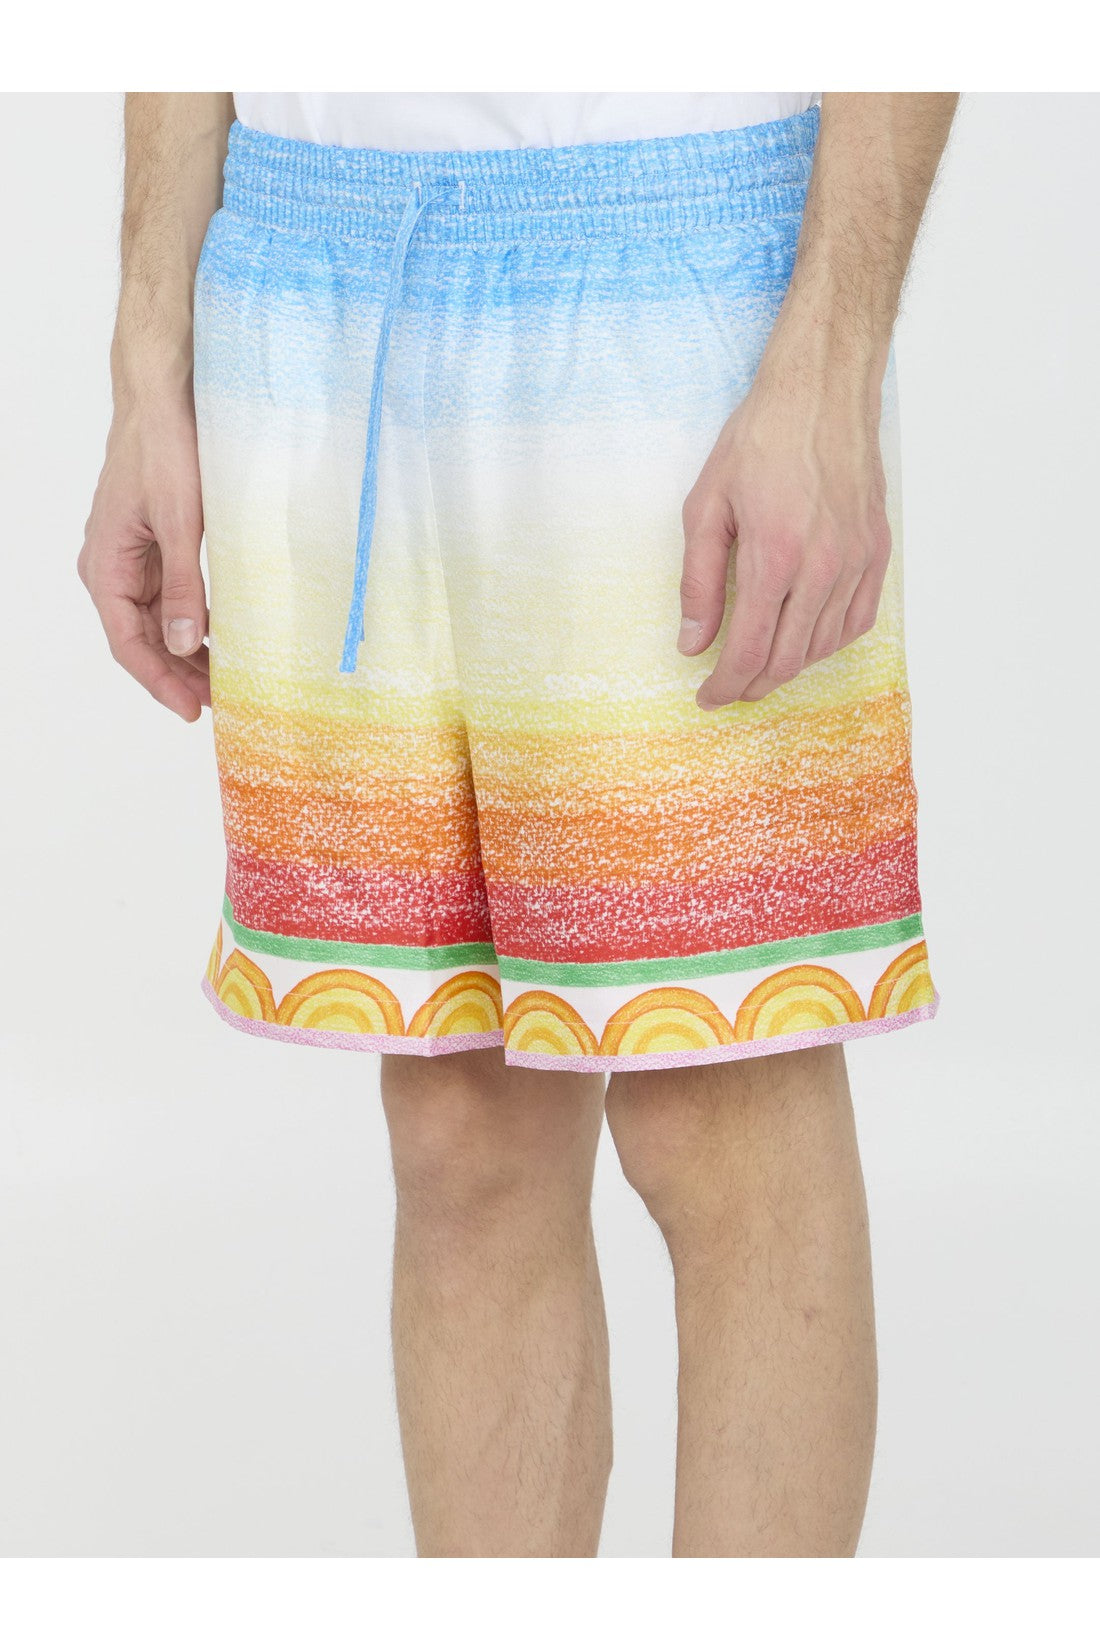 Crayon Tennis Player shorts